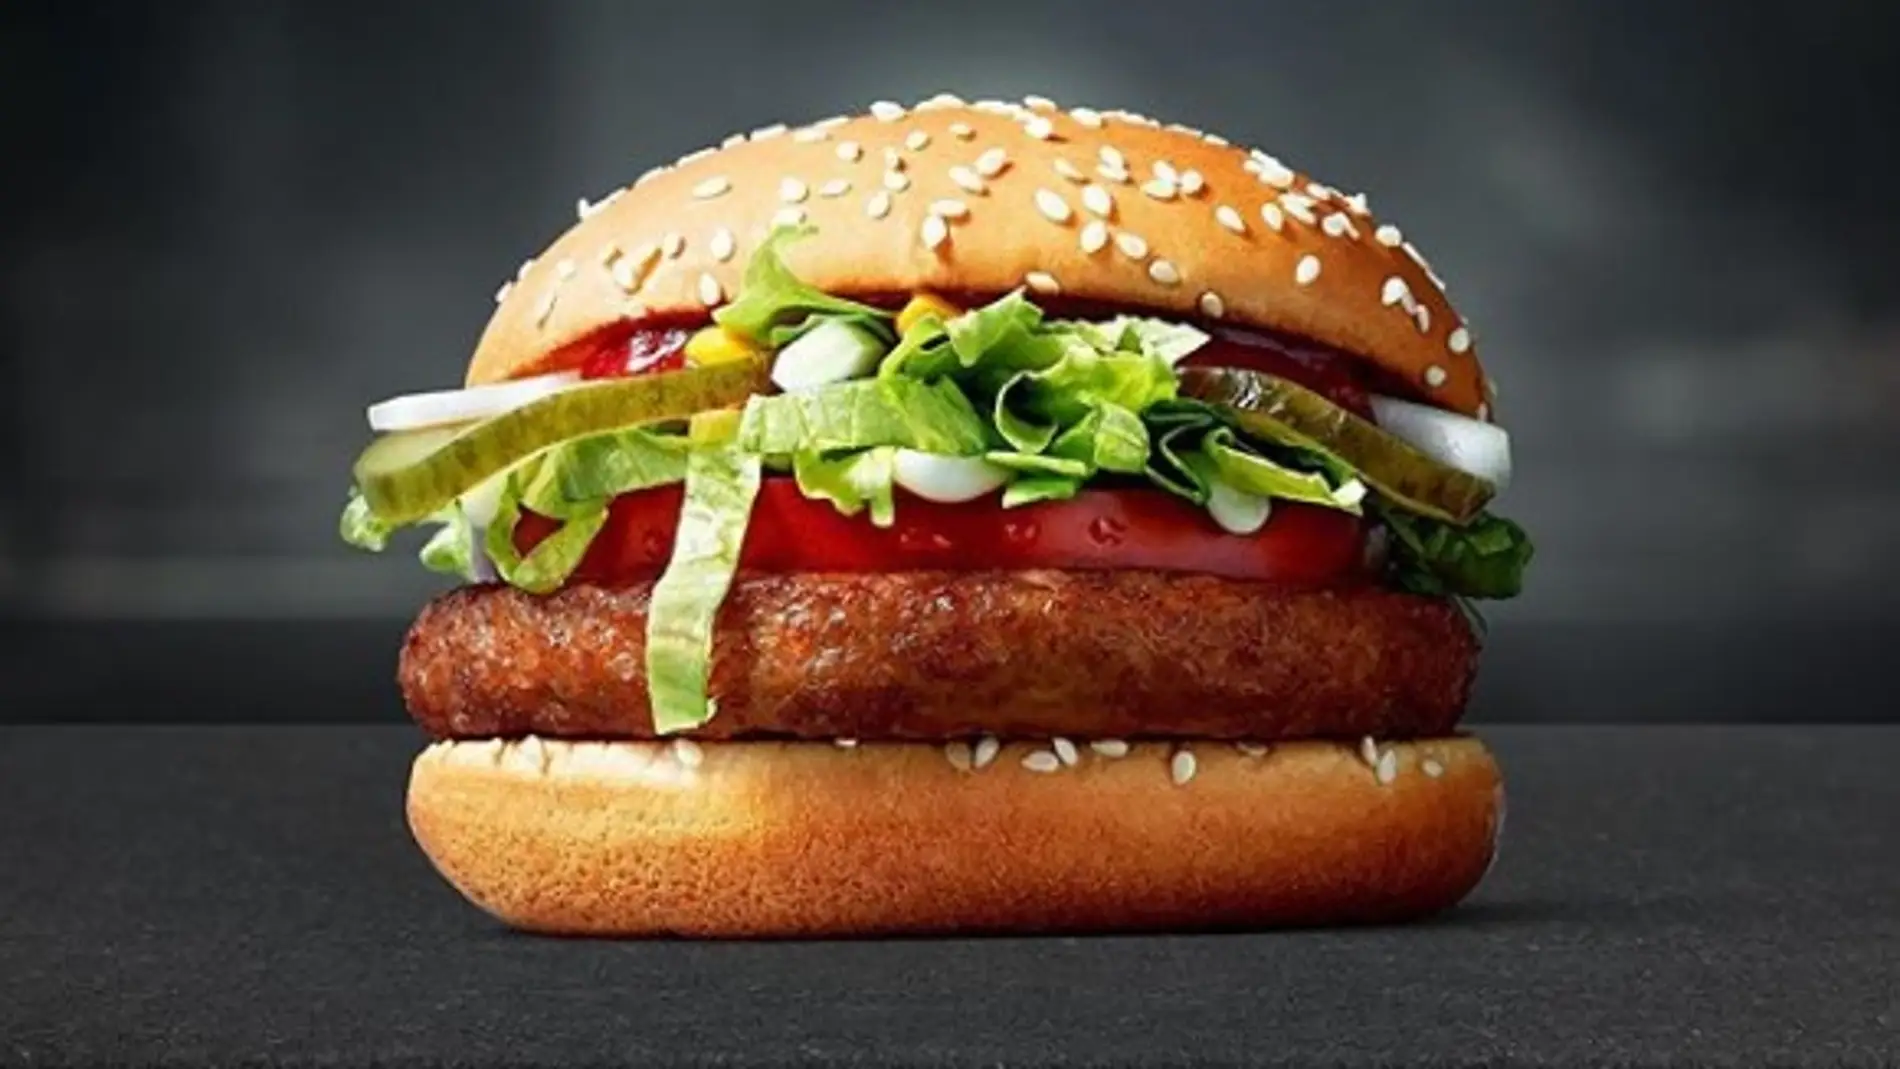  McDonald’s acaba de lanzar la McVegan, su primera hamburguesa vegana